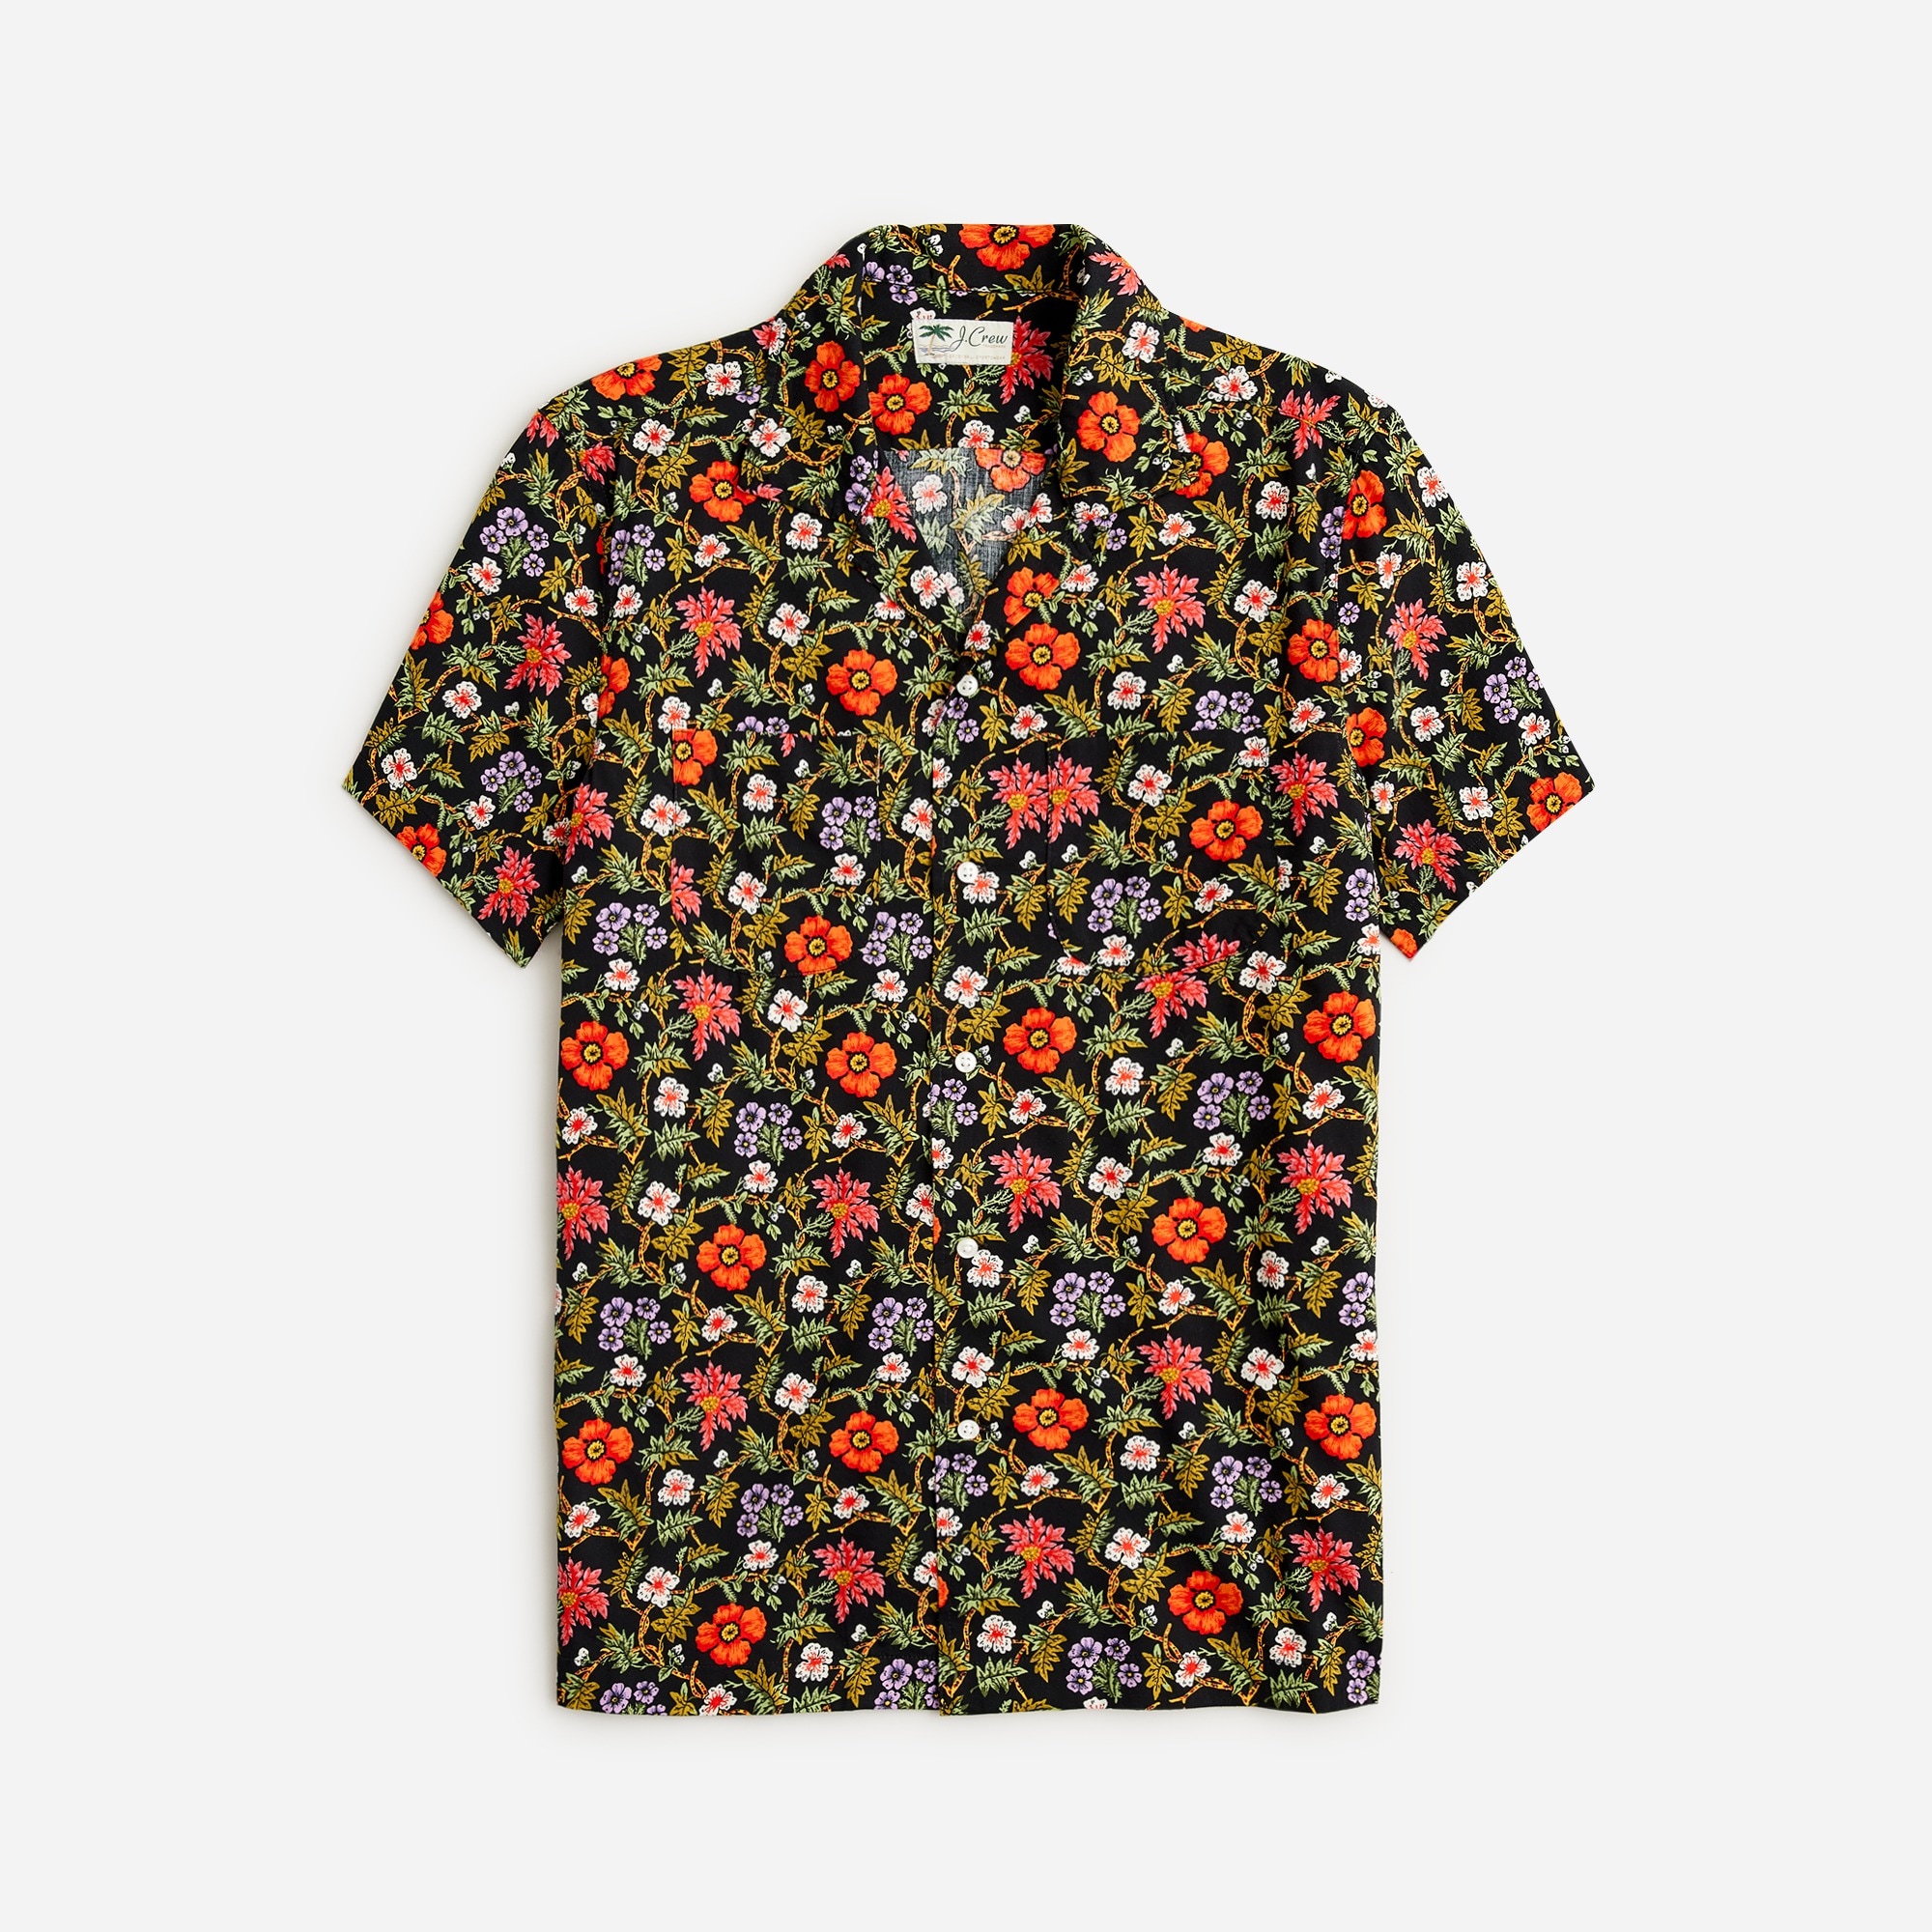  Cotton-viscose camp-collar shirt in print